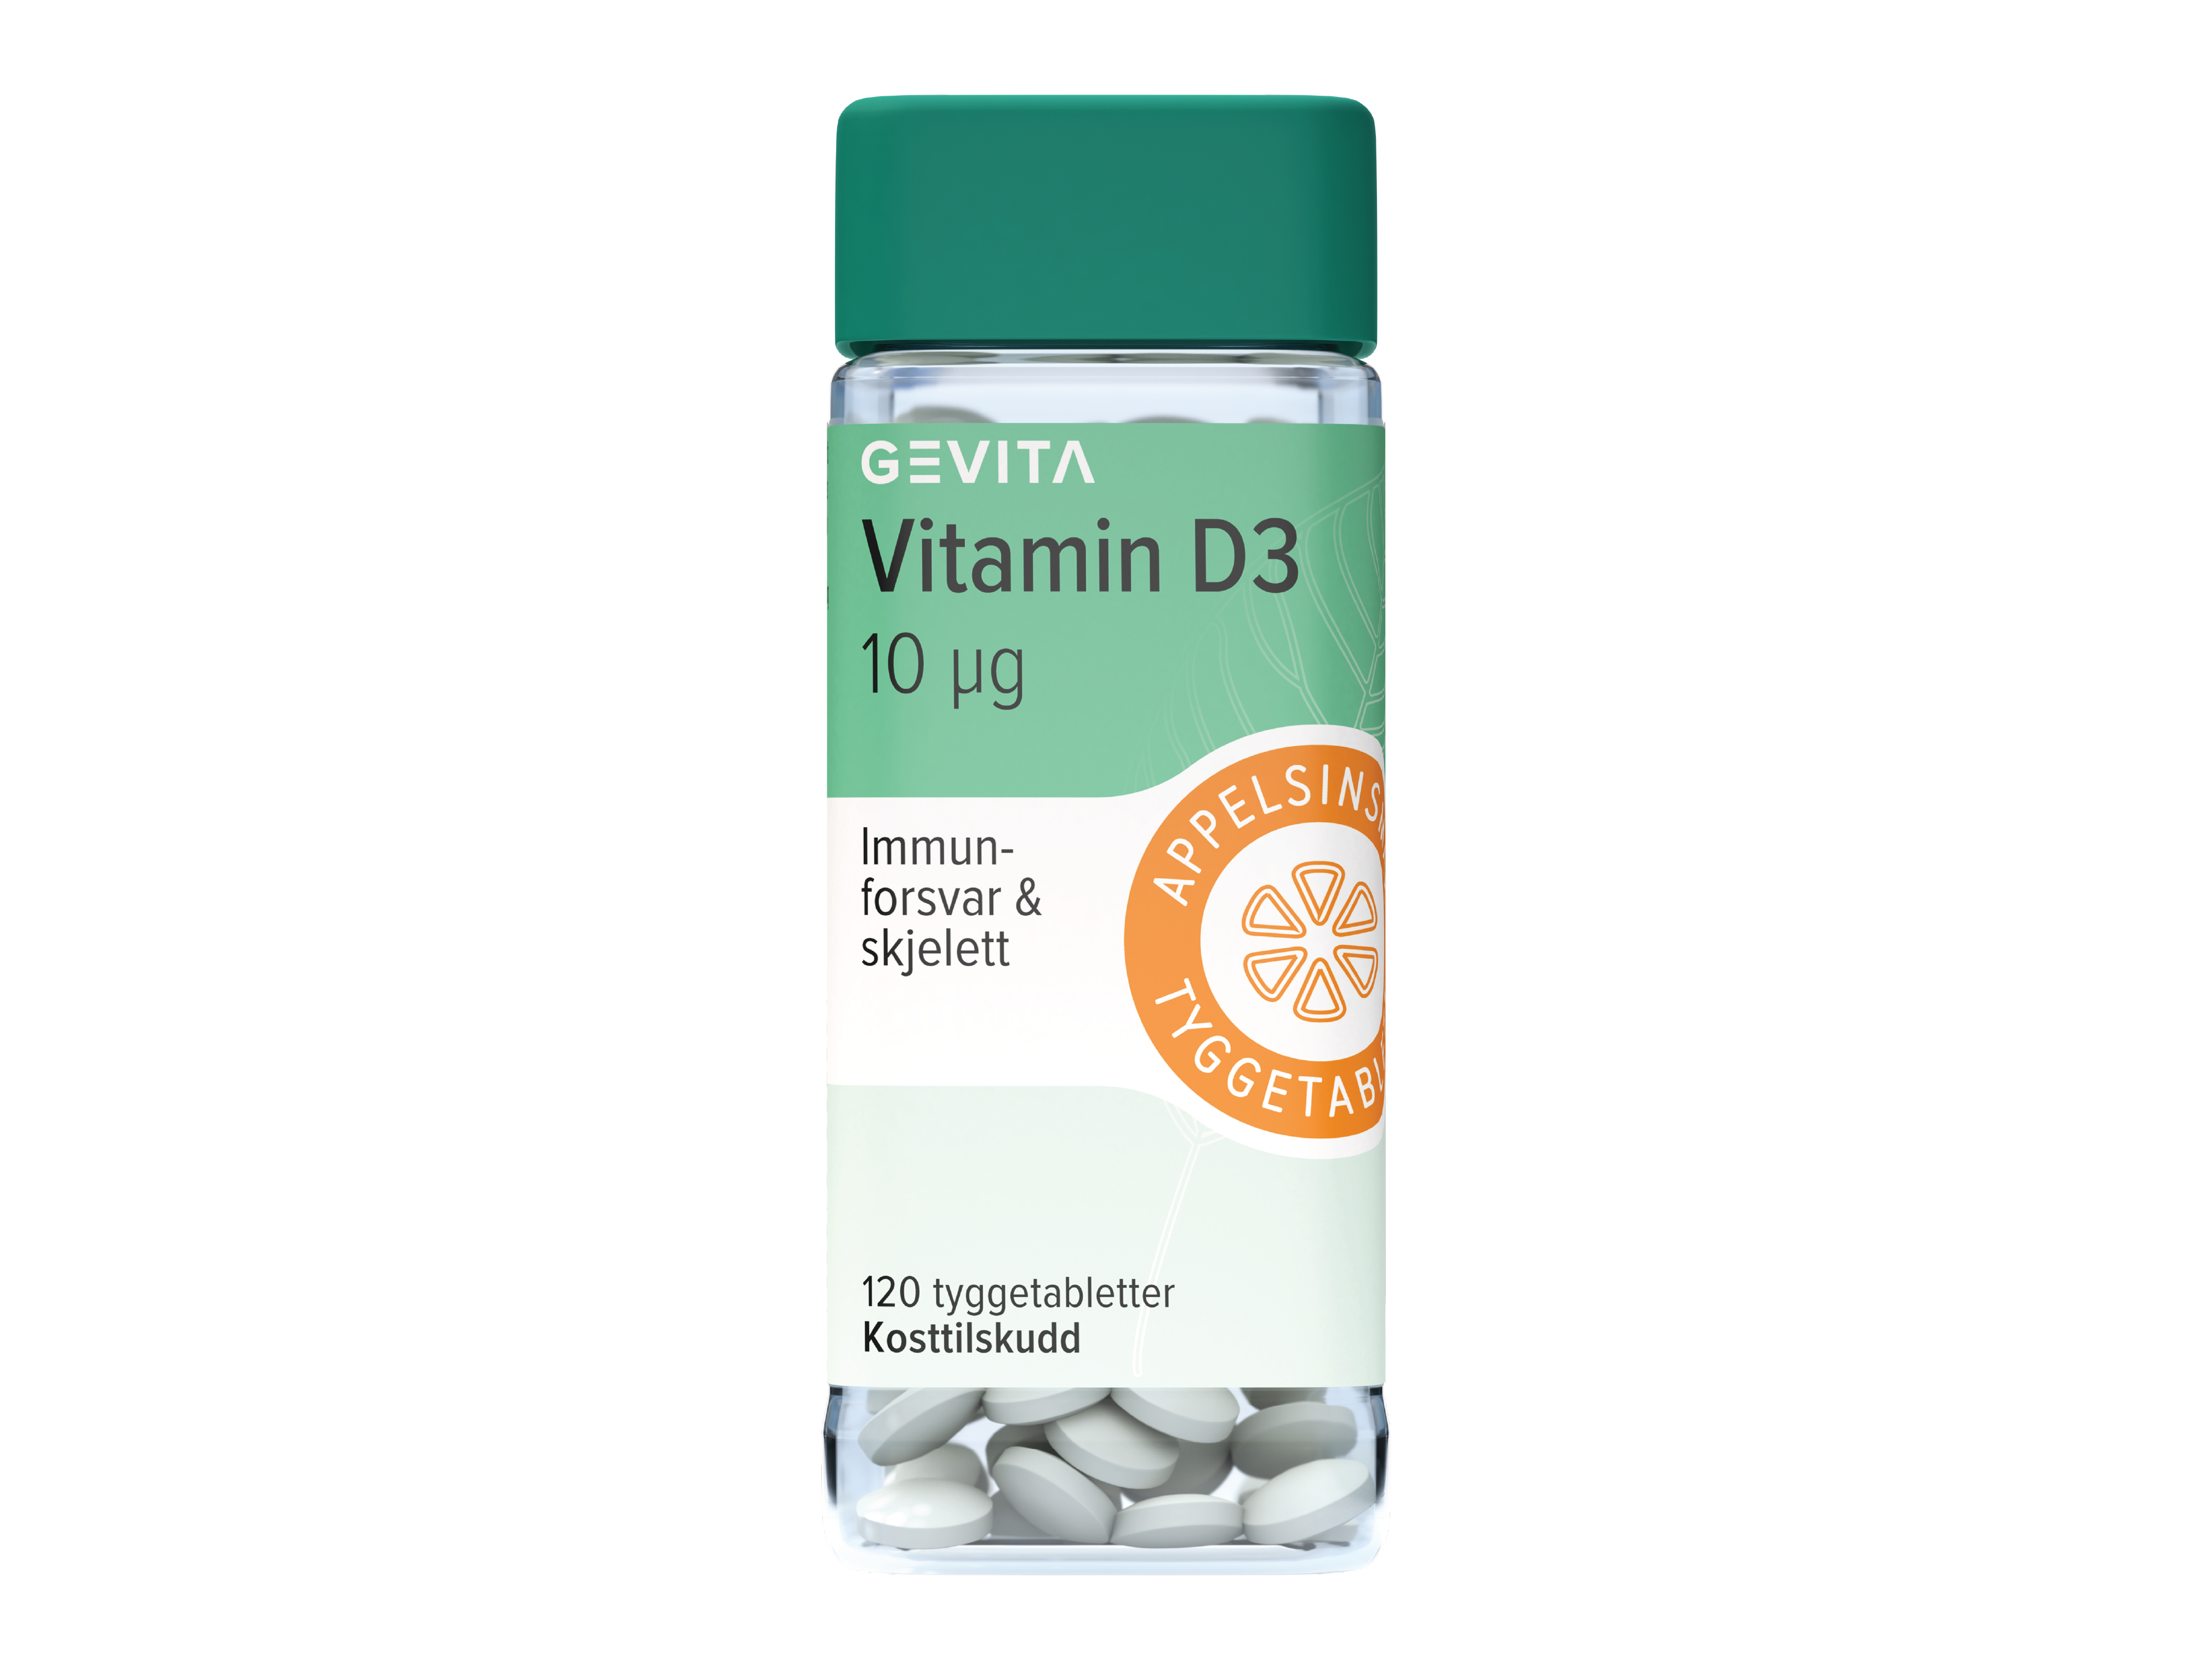 Gevita Vitamin D3 10 µg, 120 tyggetabletter